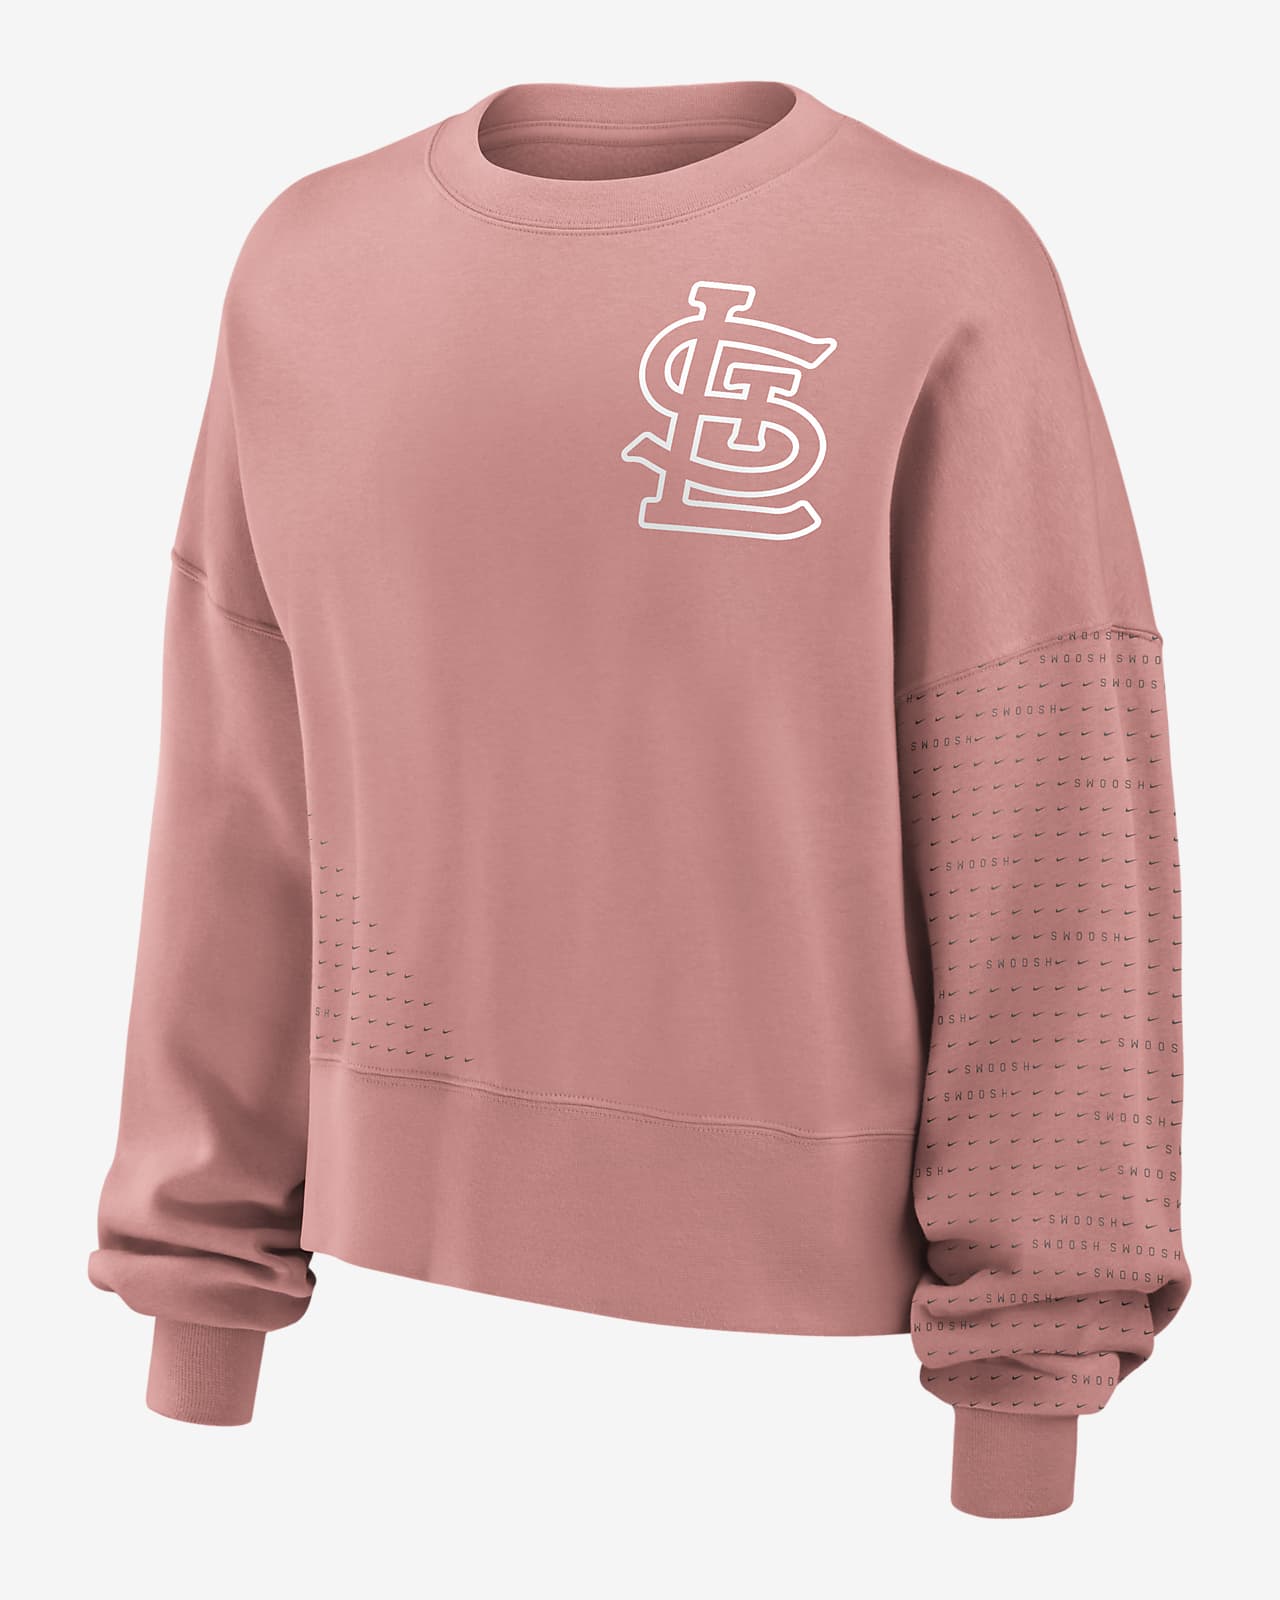 St. Louis Cardinals Statement Women's Nike MLB Pullover Sweatshirt